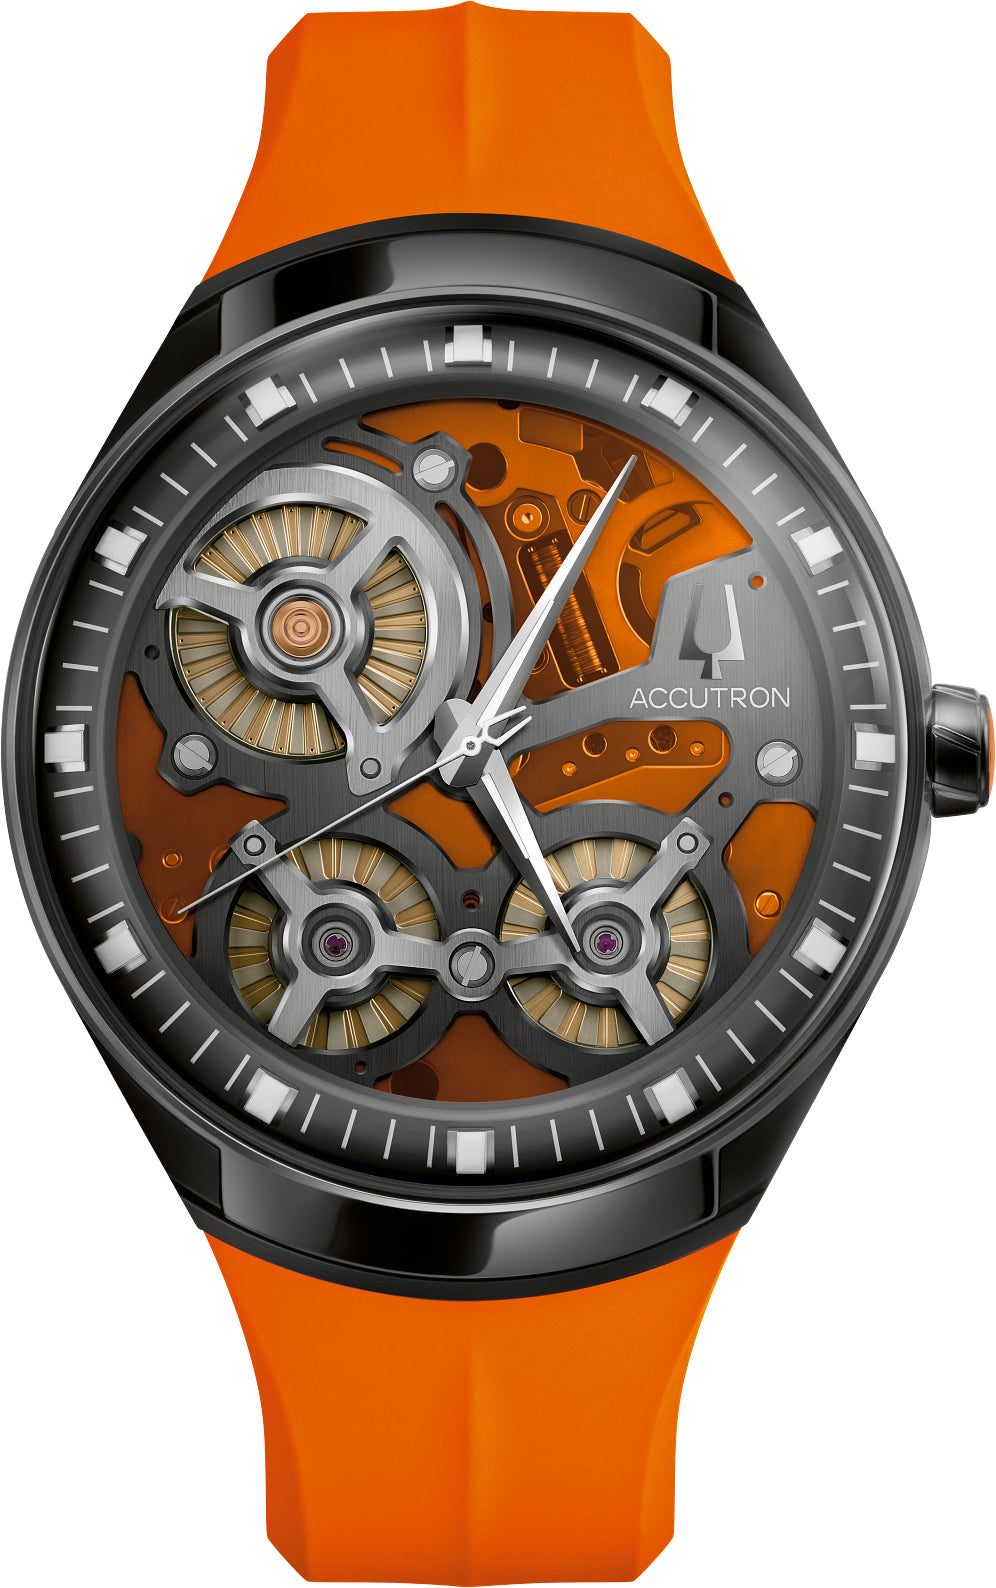 Accutron Watch DNA Casino Orange Limited Edition